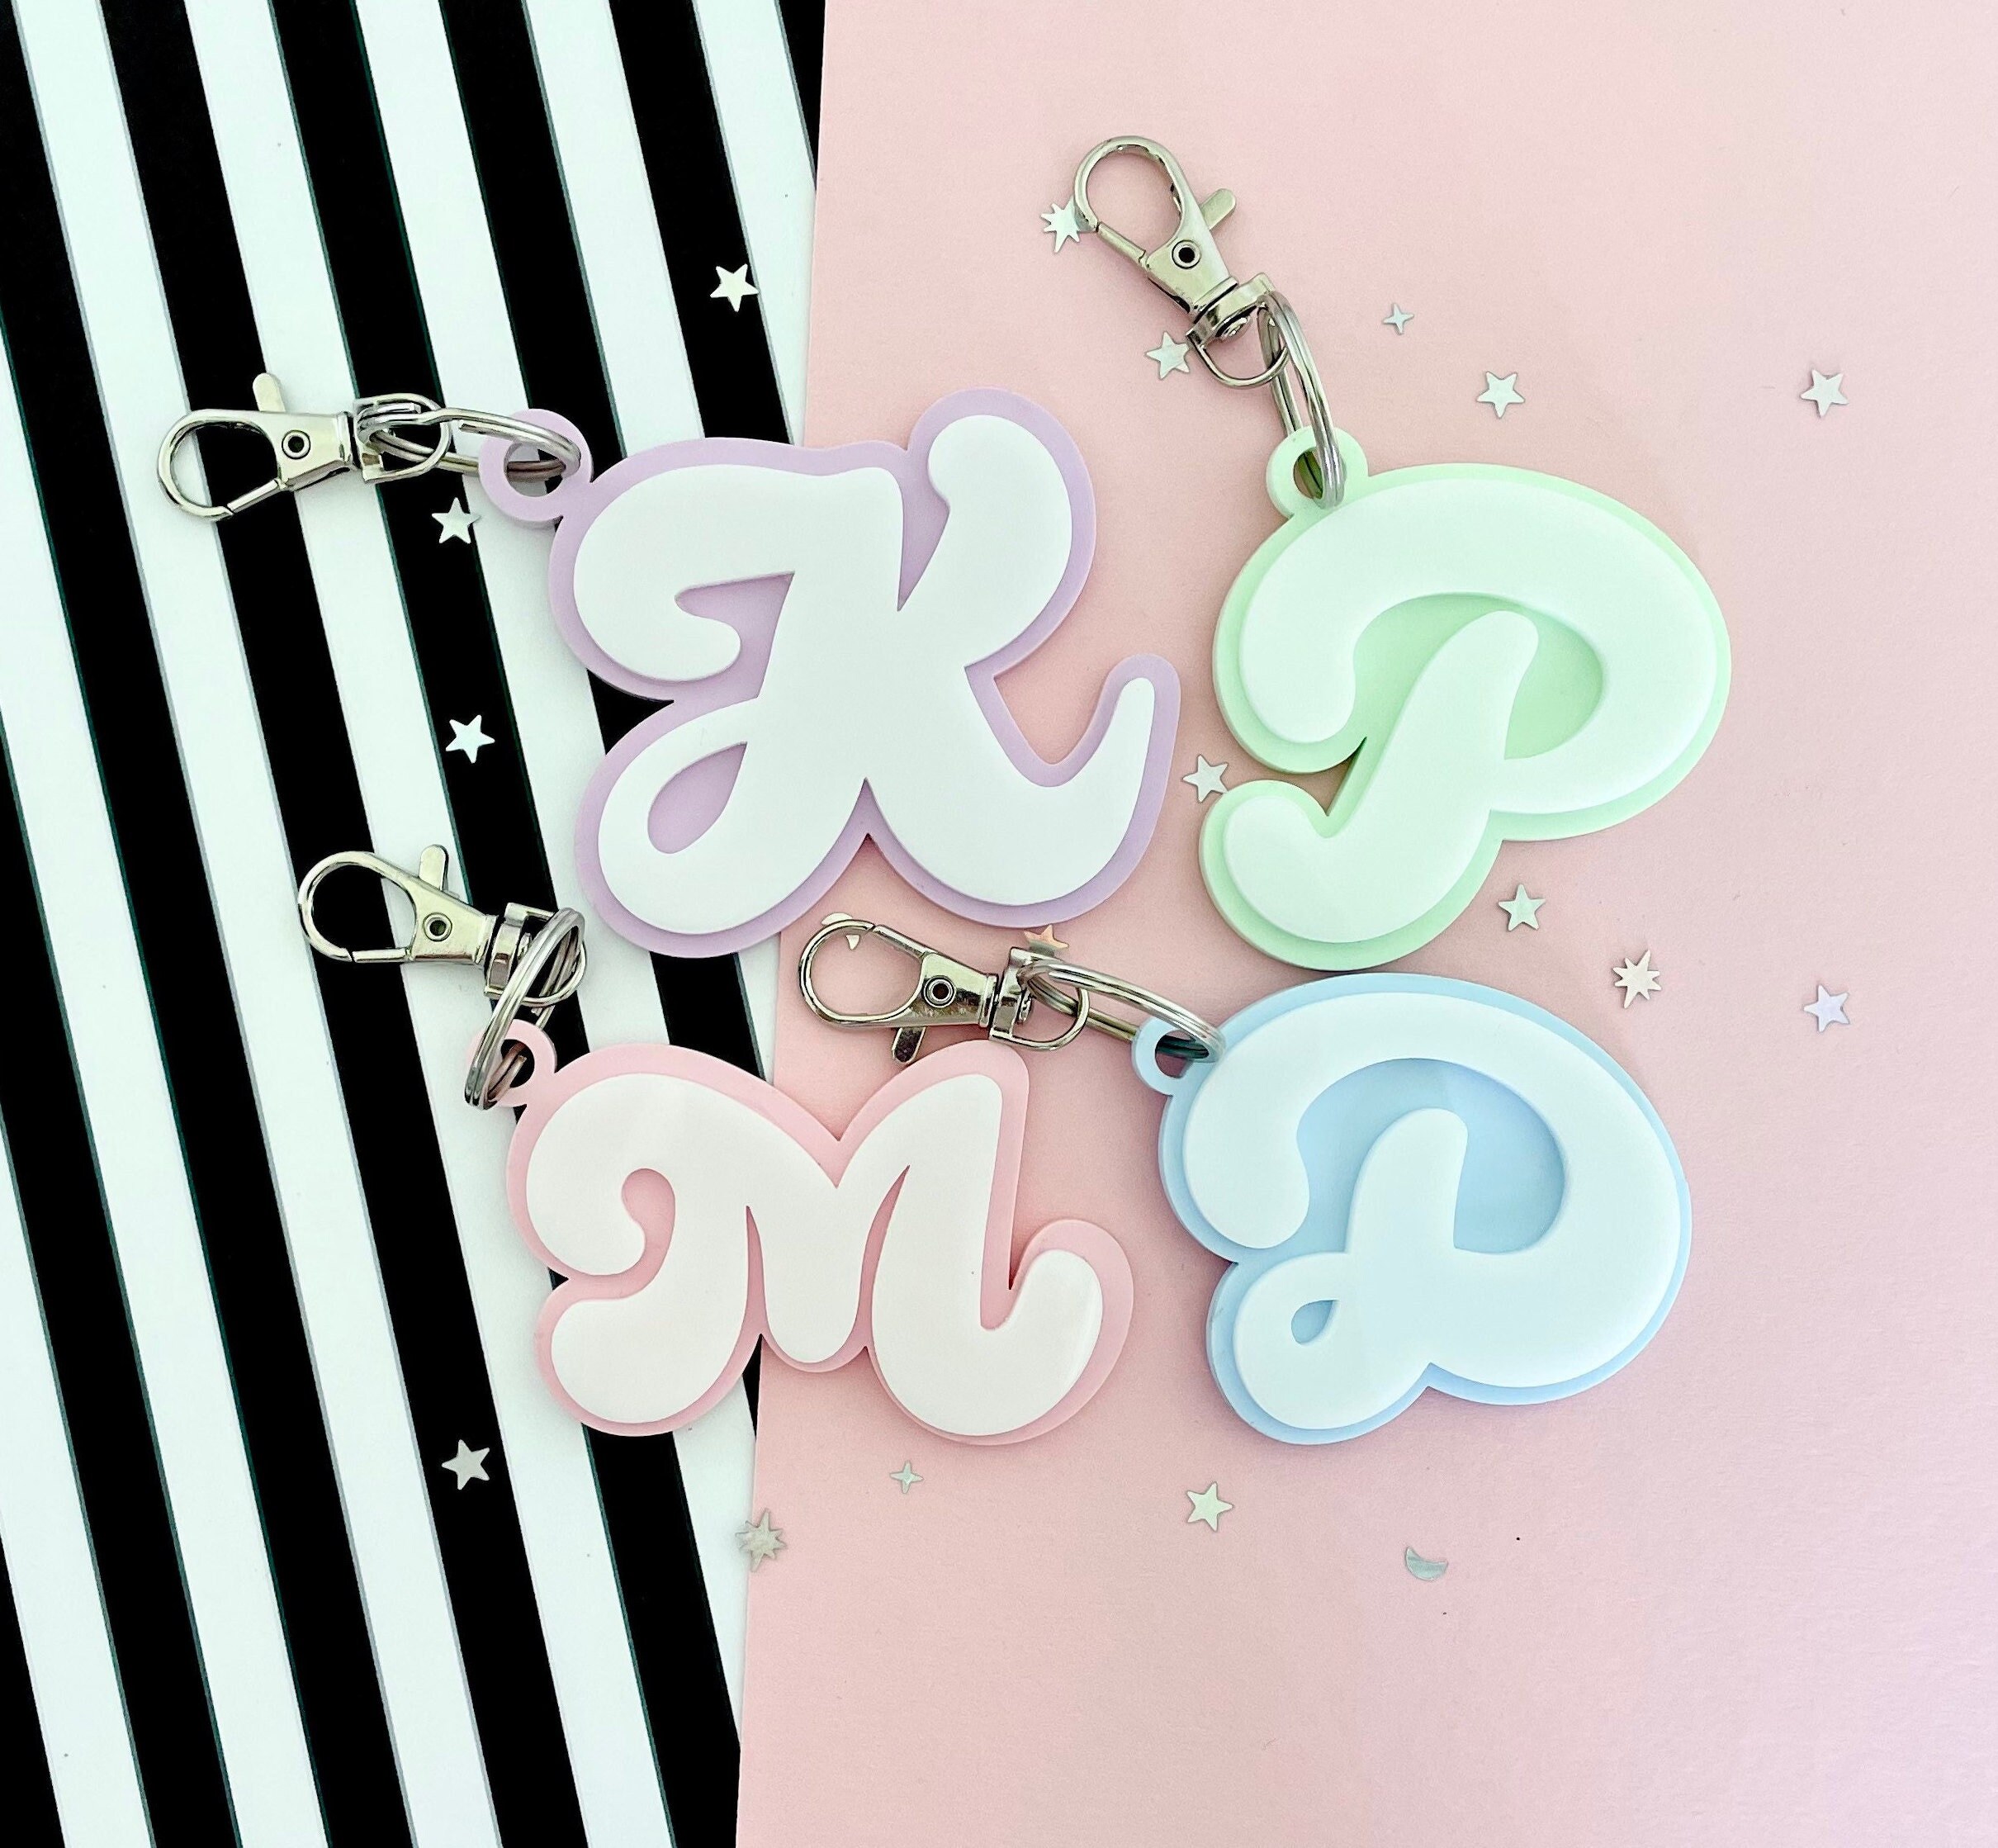  UTHTY Cute Keychain, 1 Piece, Acrylic 26 Letters